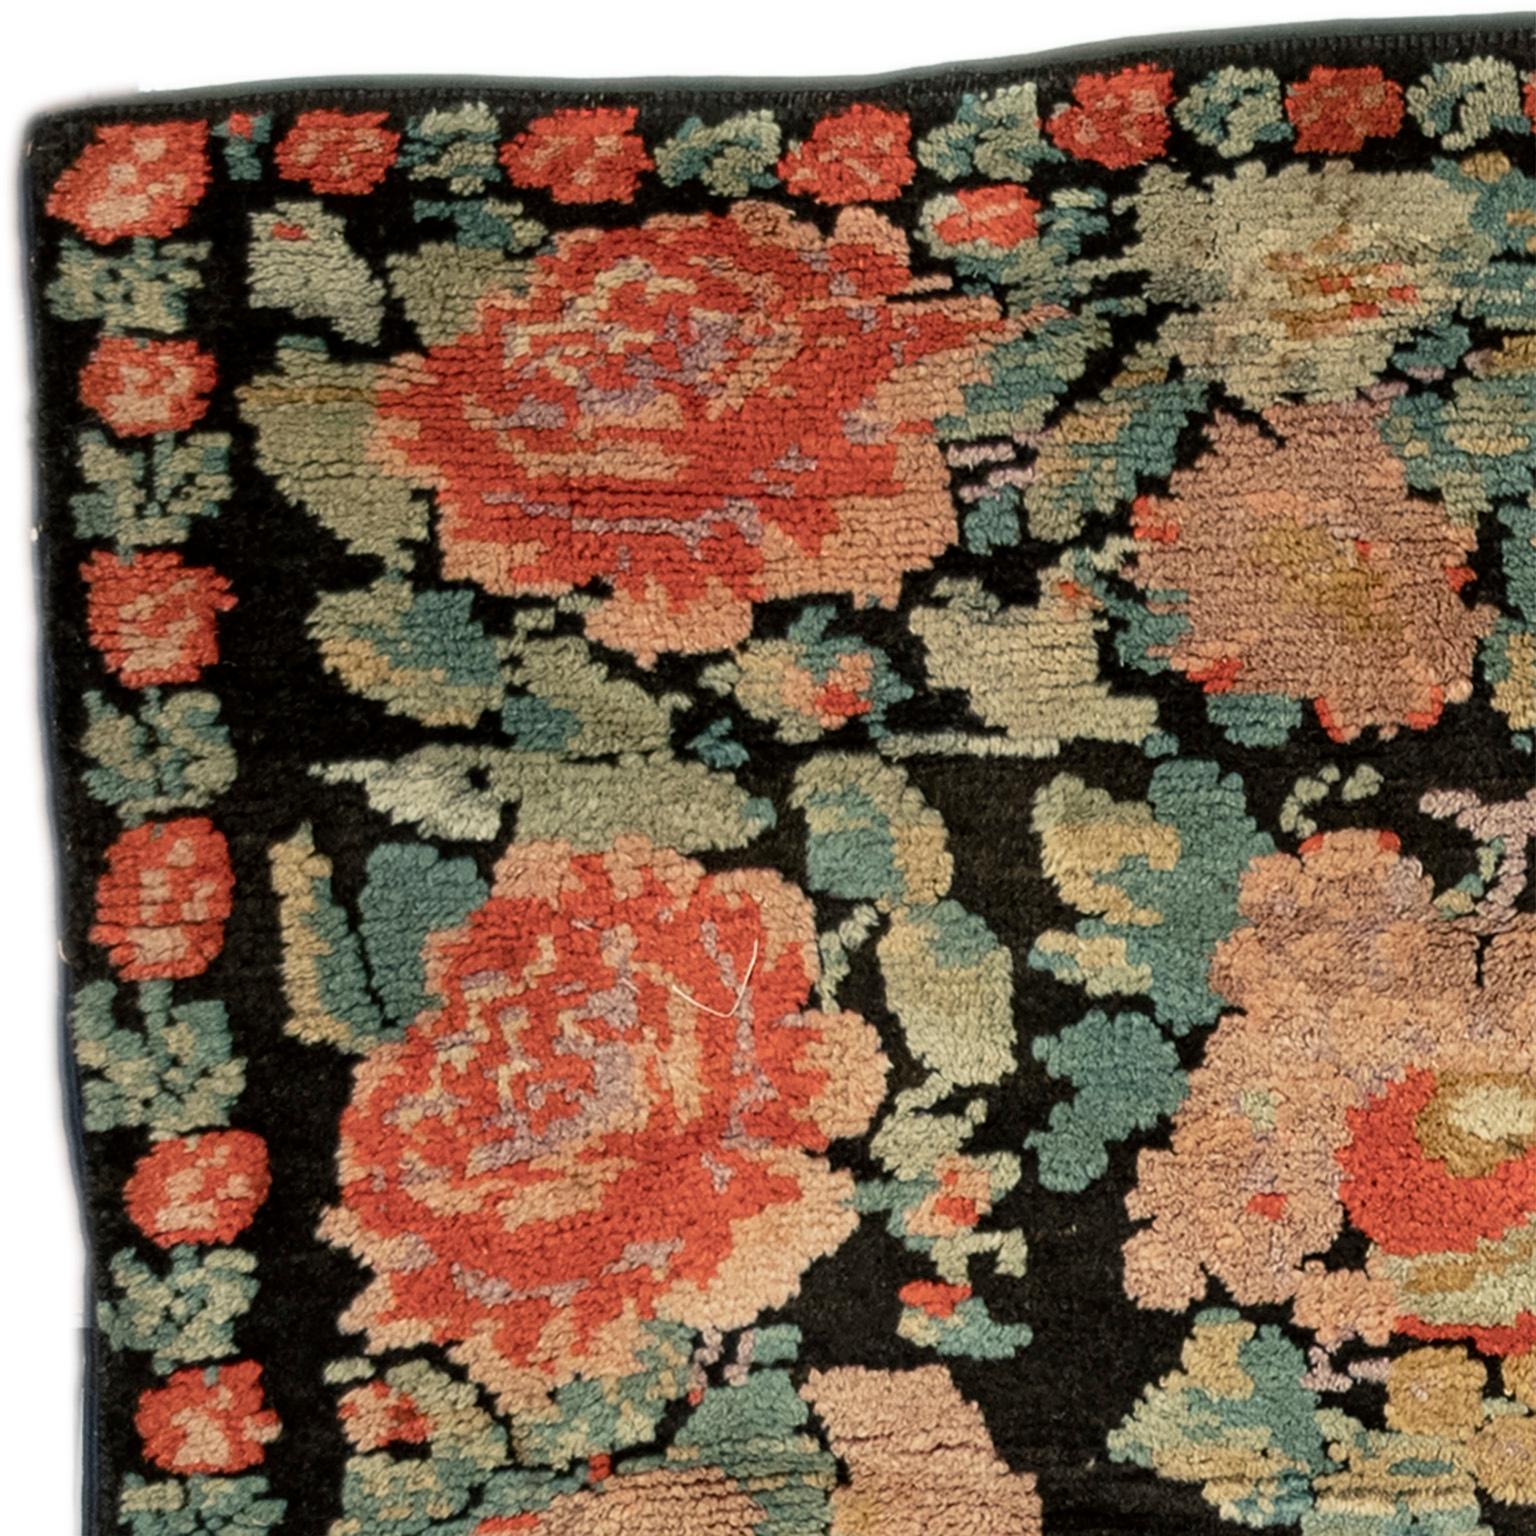 Vintage Ukrainian rug circa 1900

Handwoven, high pile.